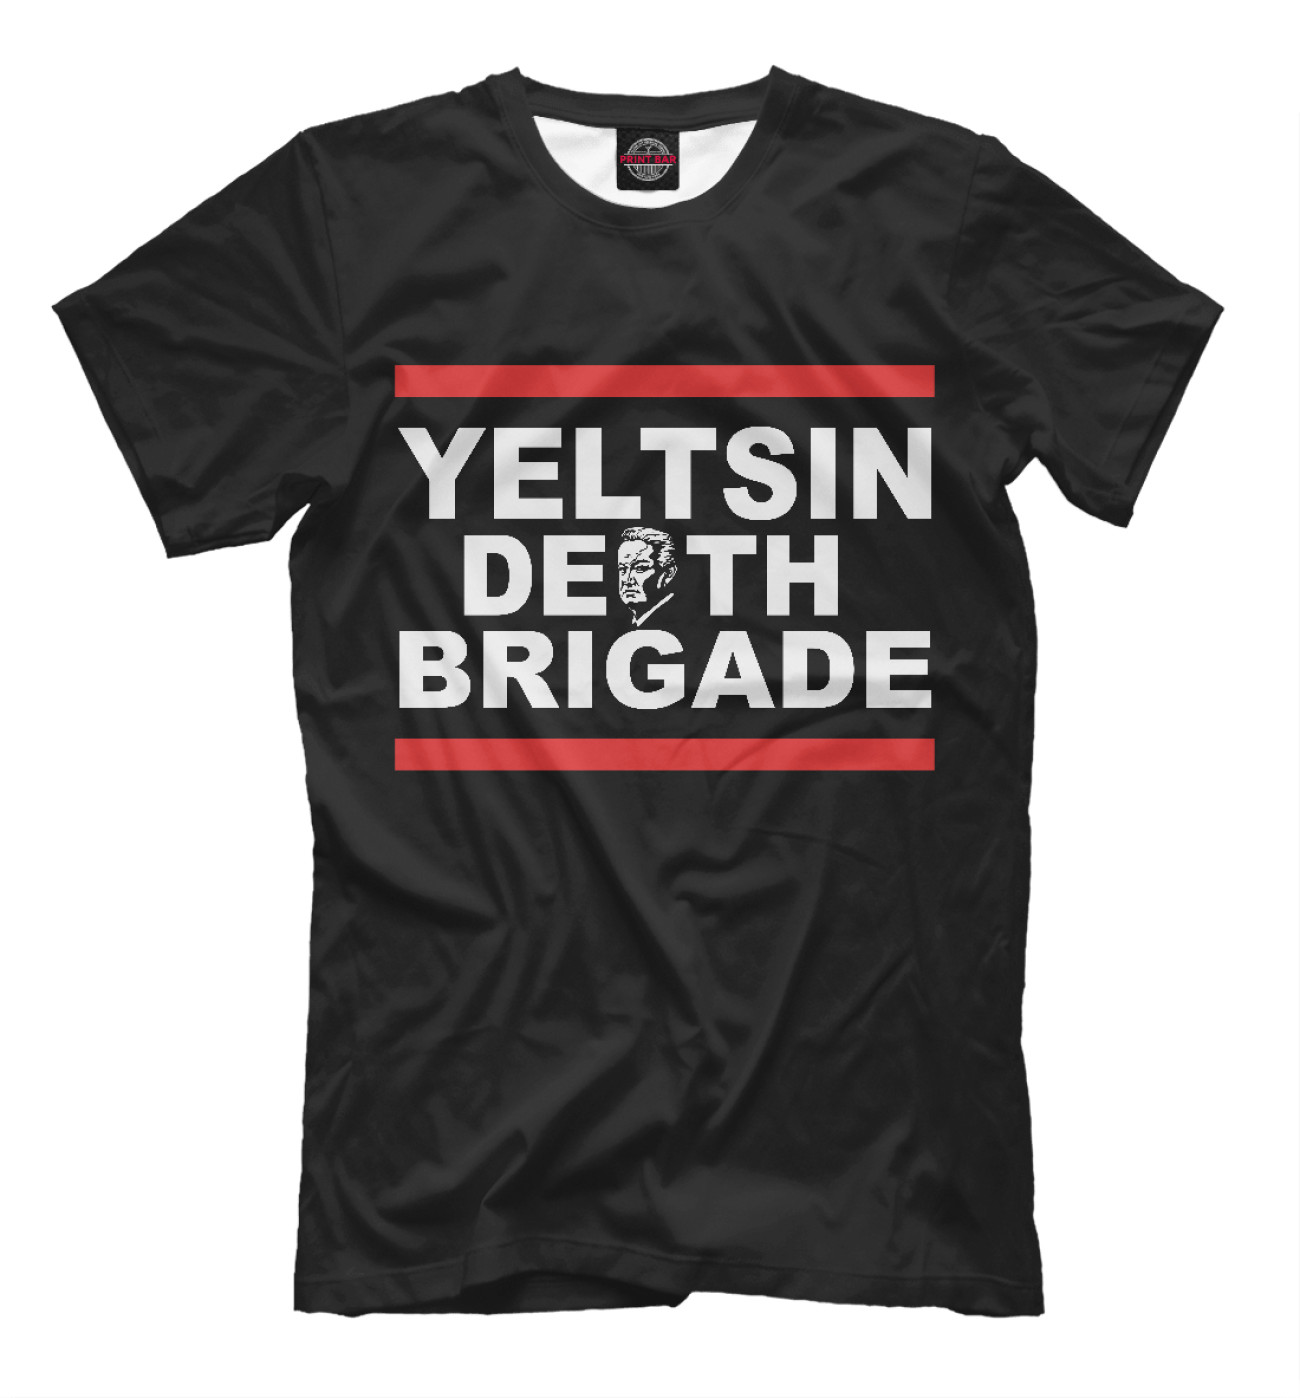 Мужская Футболка Yeltsin Death Brigade, артикул: VSY-479490-fut-2